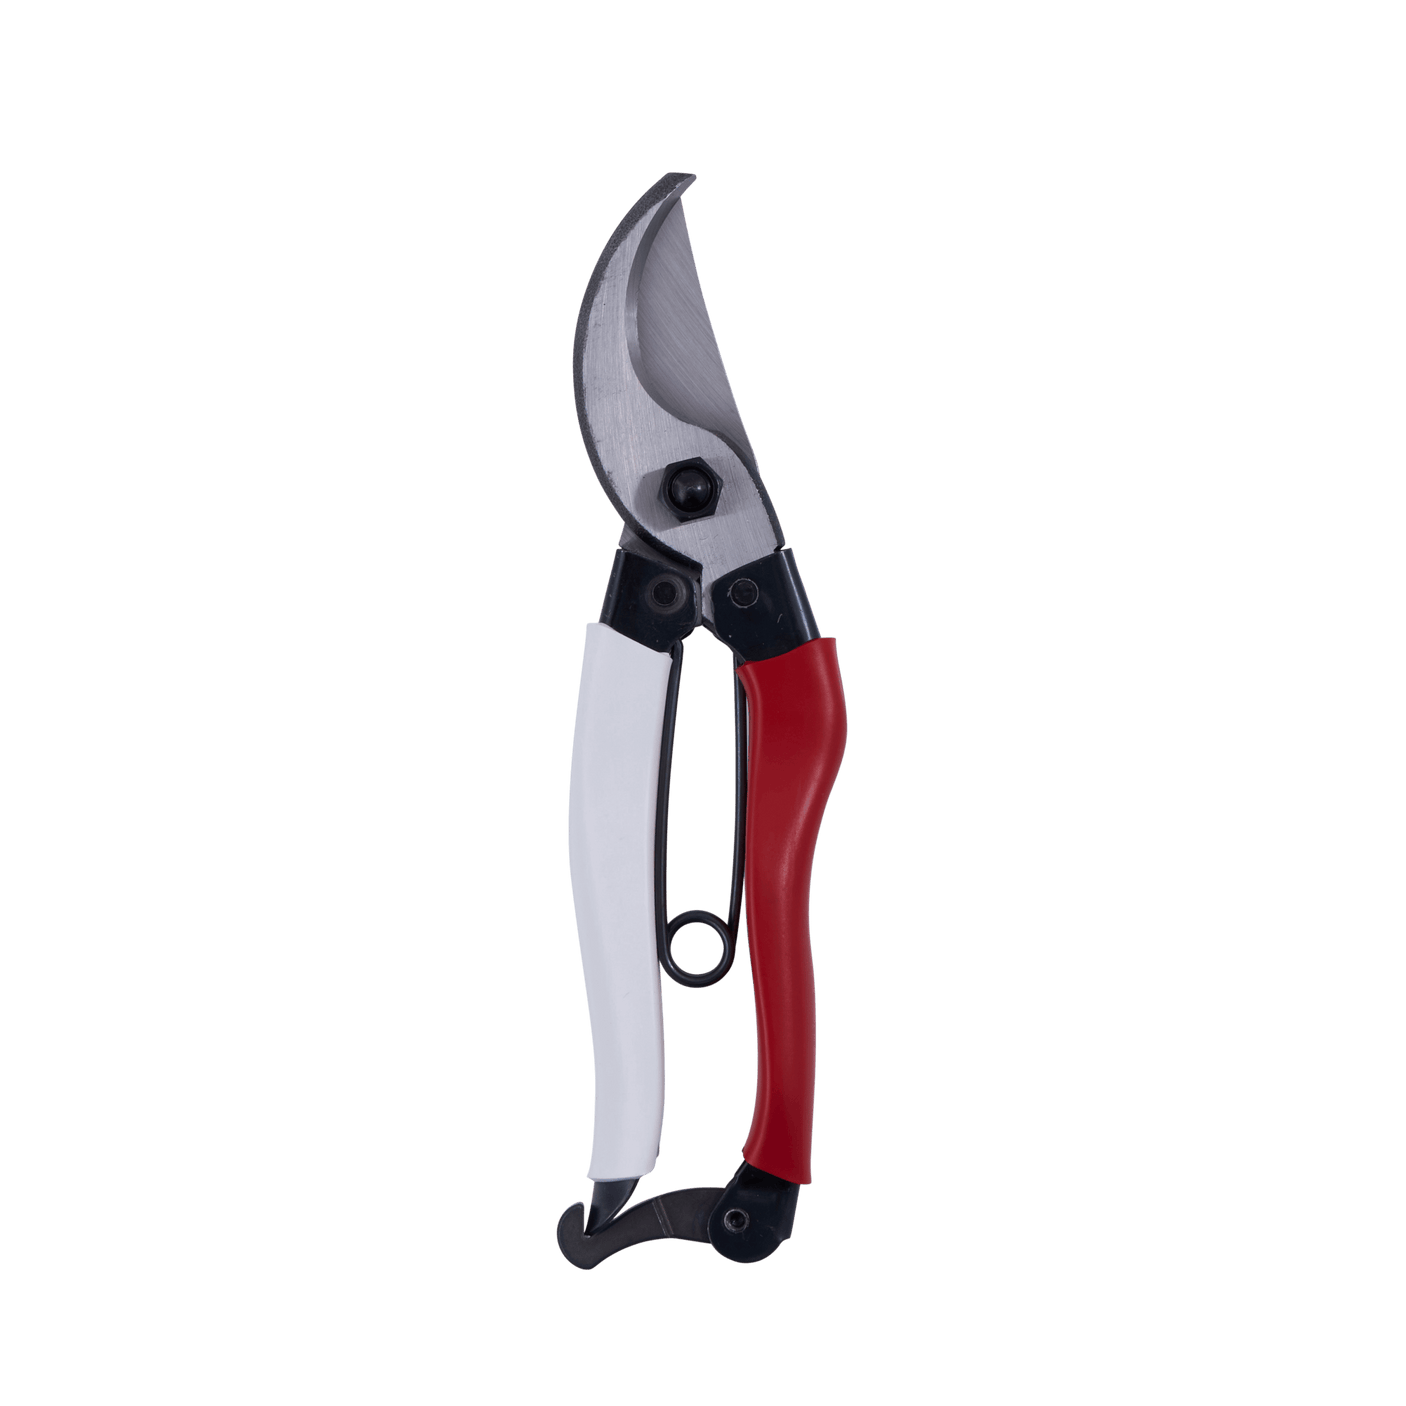 Okatsune Pruning Shears - 180mm - Secateurs - Japanese Tools Australia